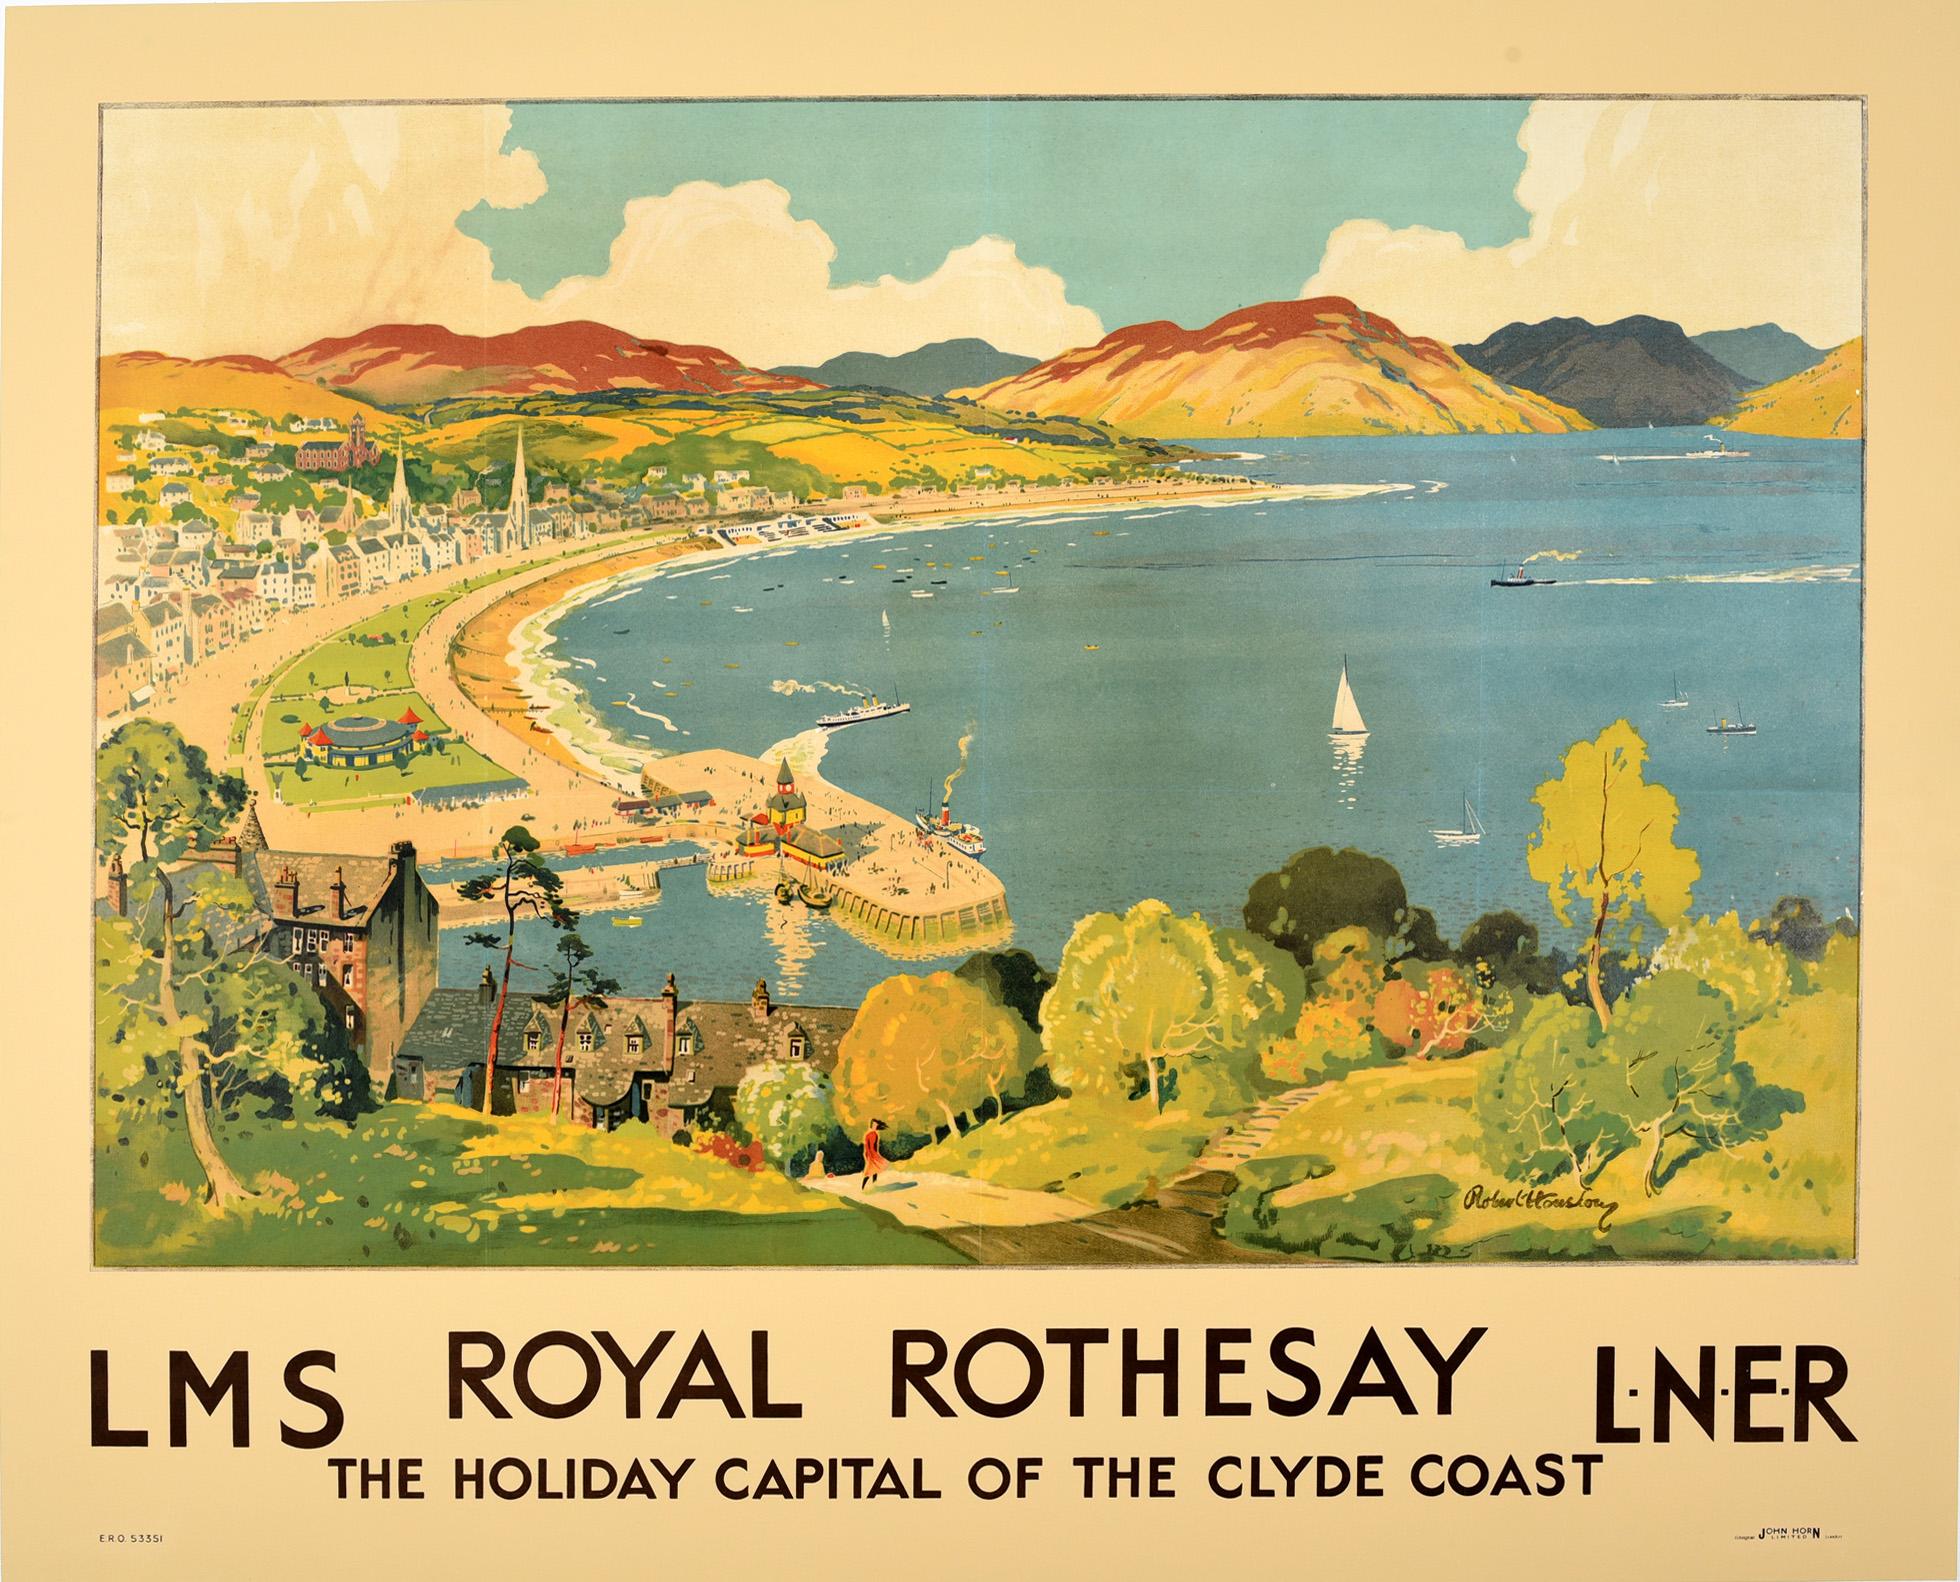 Robert Houston Print - Original Vintage Railway Poster Royal Rothesay Isle Of Bute Clyde Coast Scotland